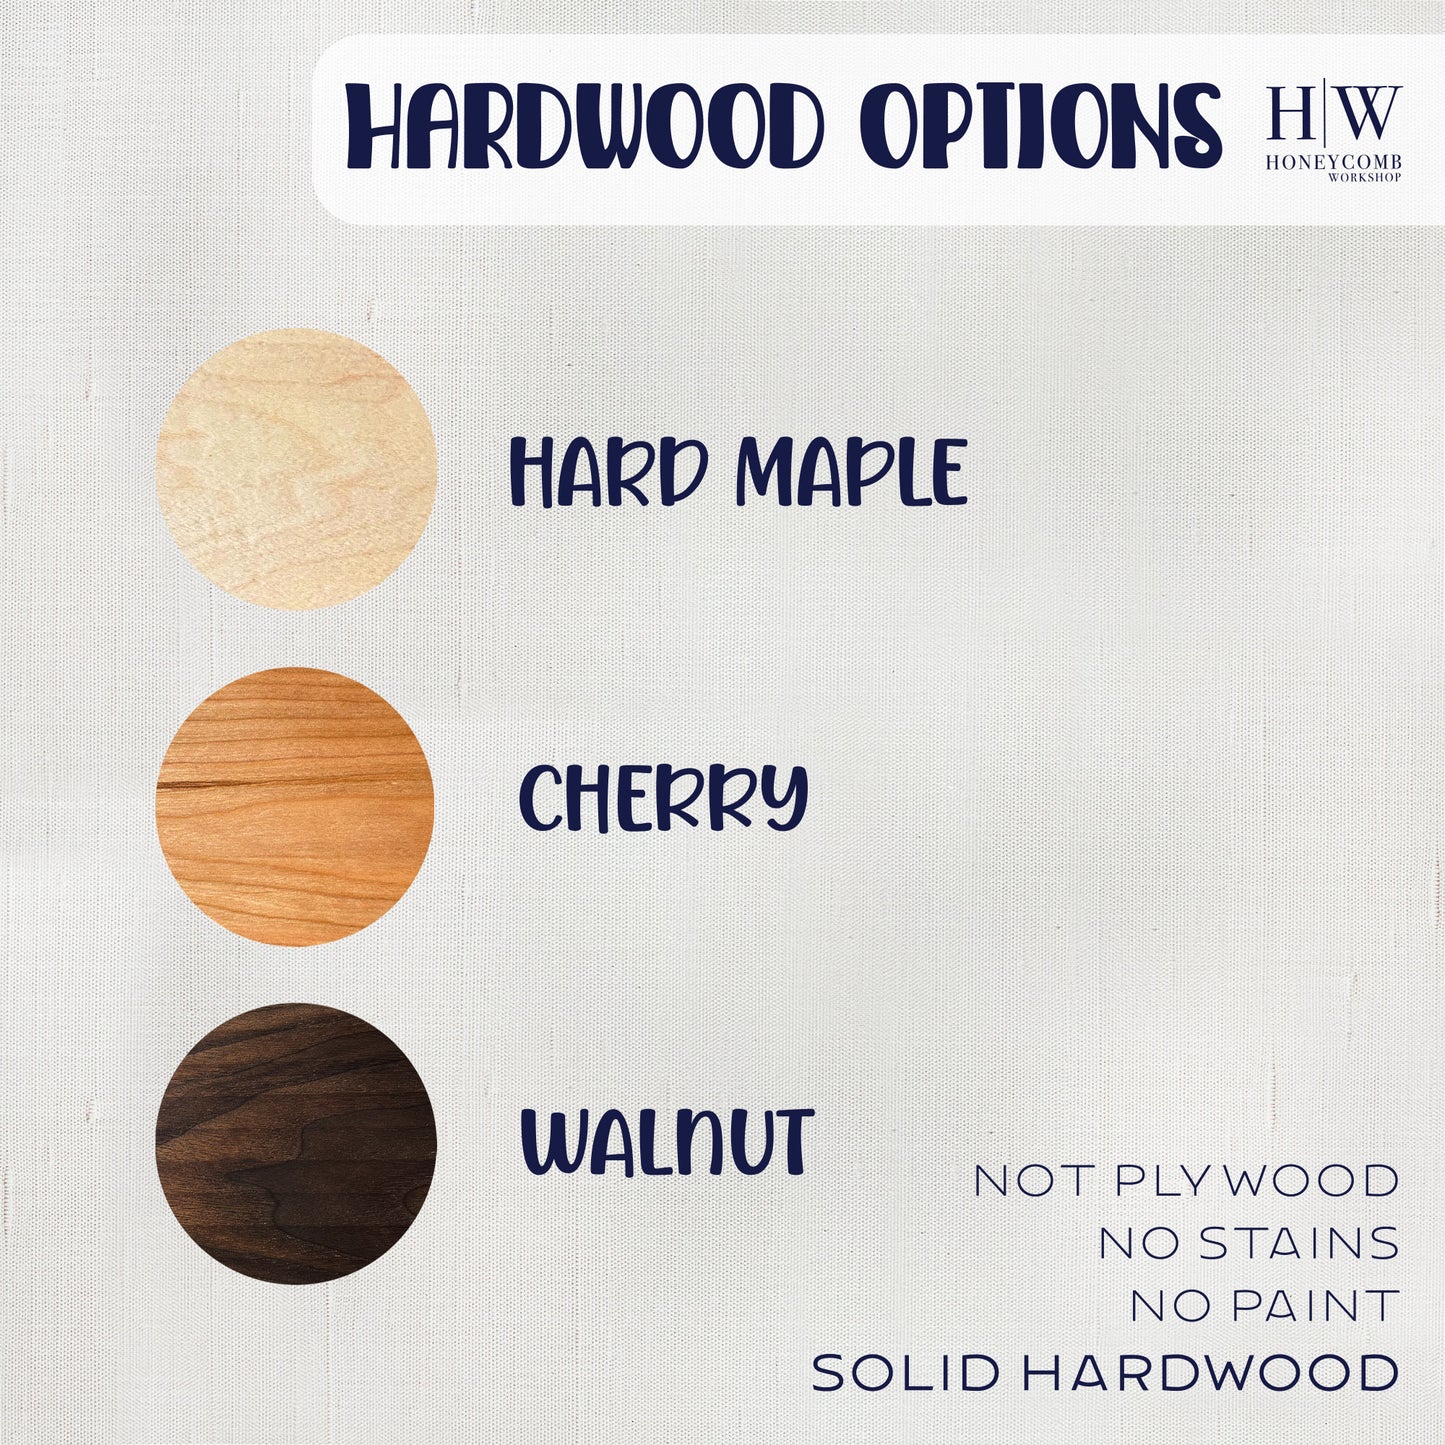 Hardwood options Focus Breathe Relax cherry no stain.